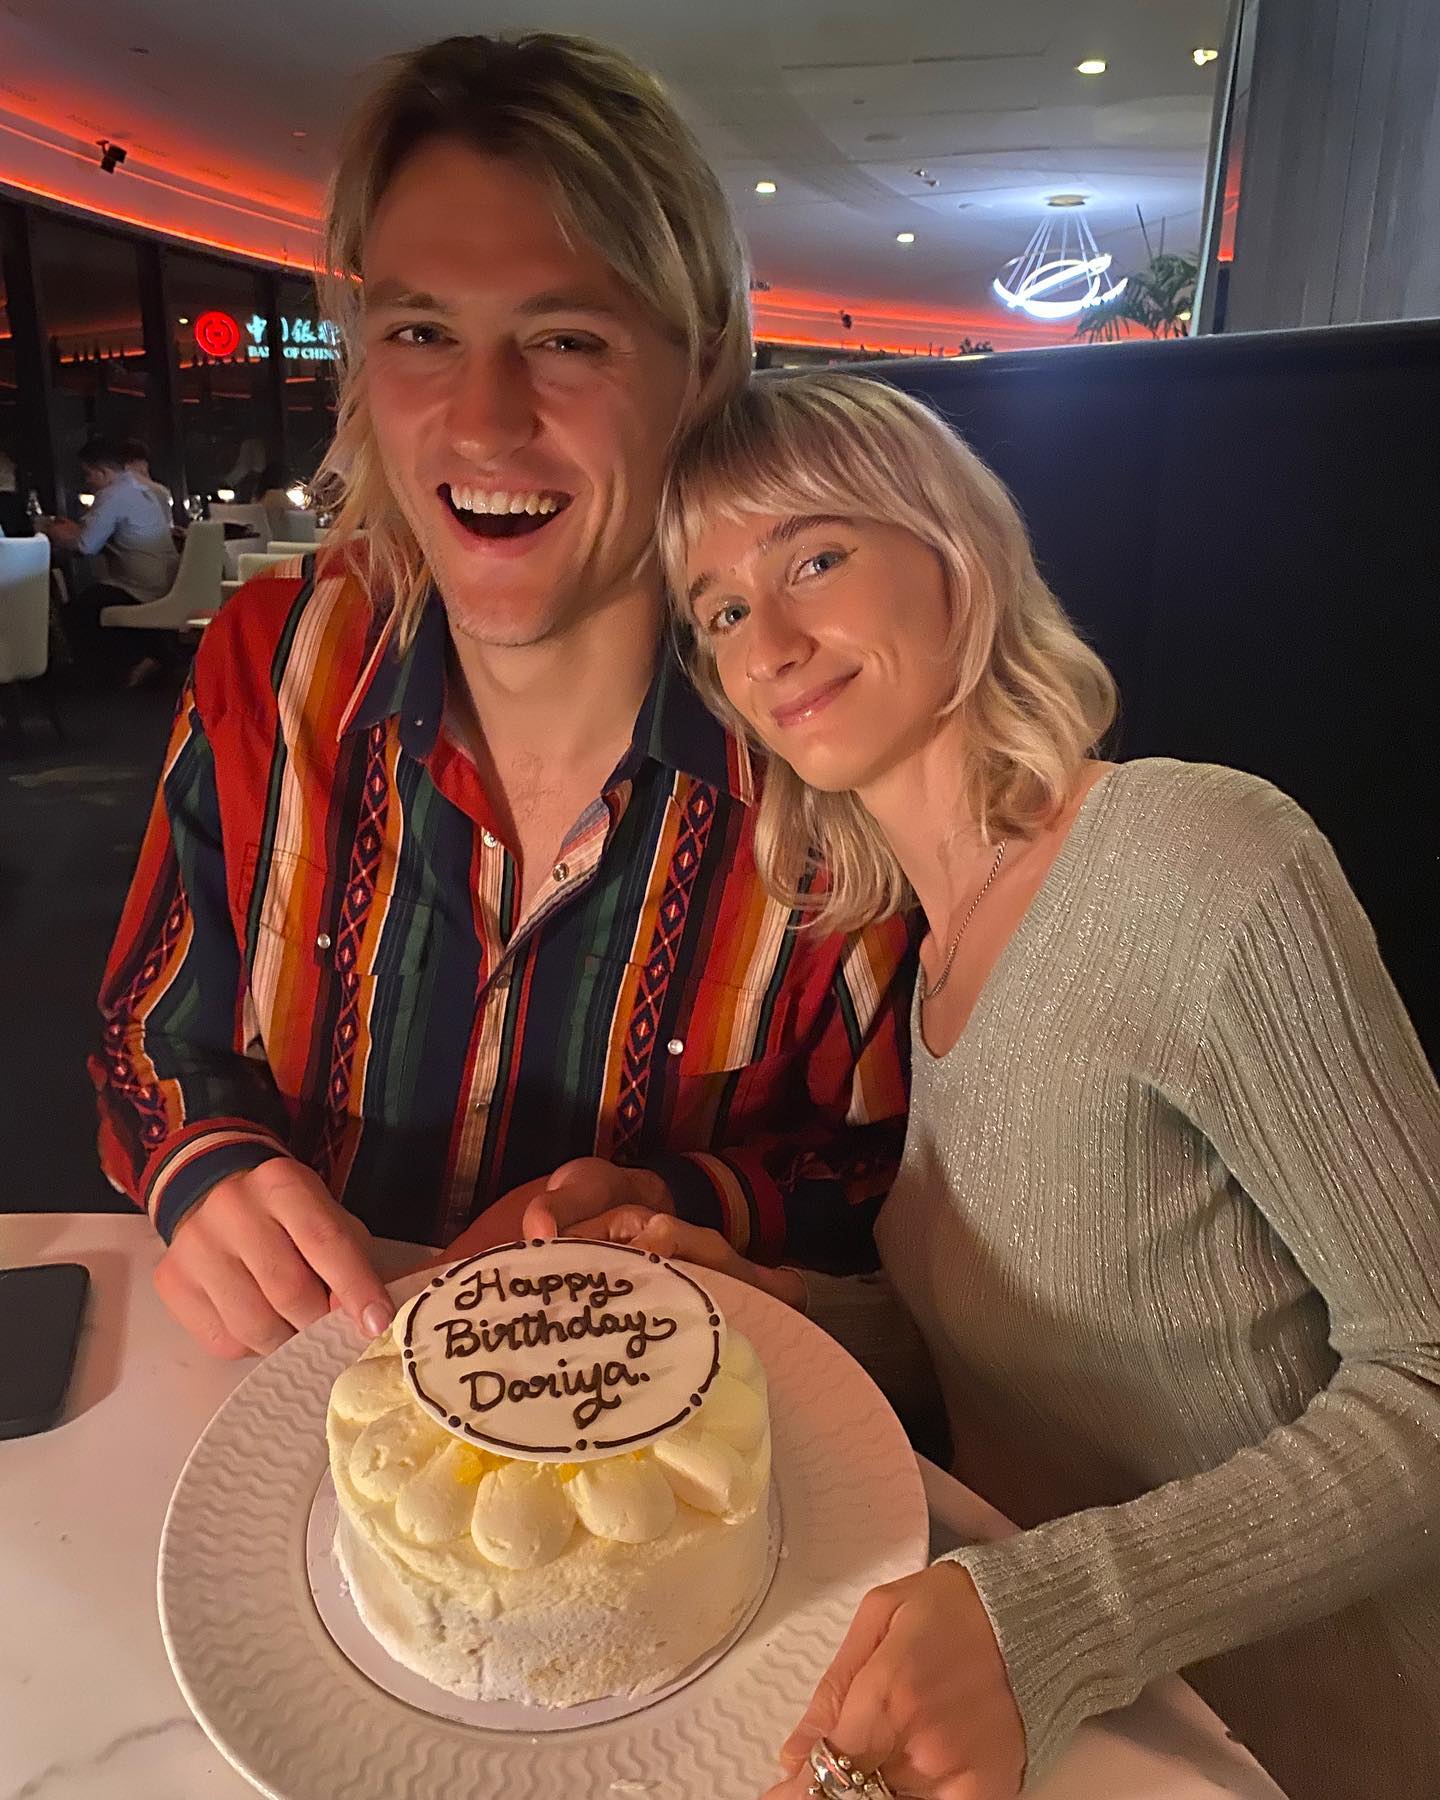 The pair celebrating birthday